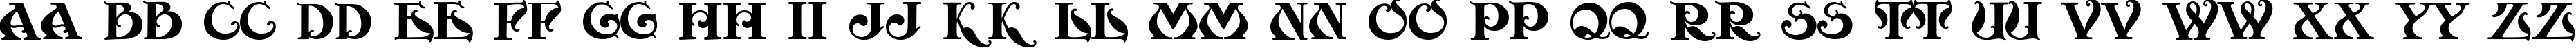 Пример написания английского алфавита шрифтом Moulin Rouge